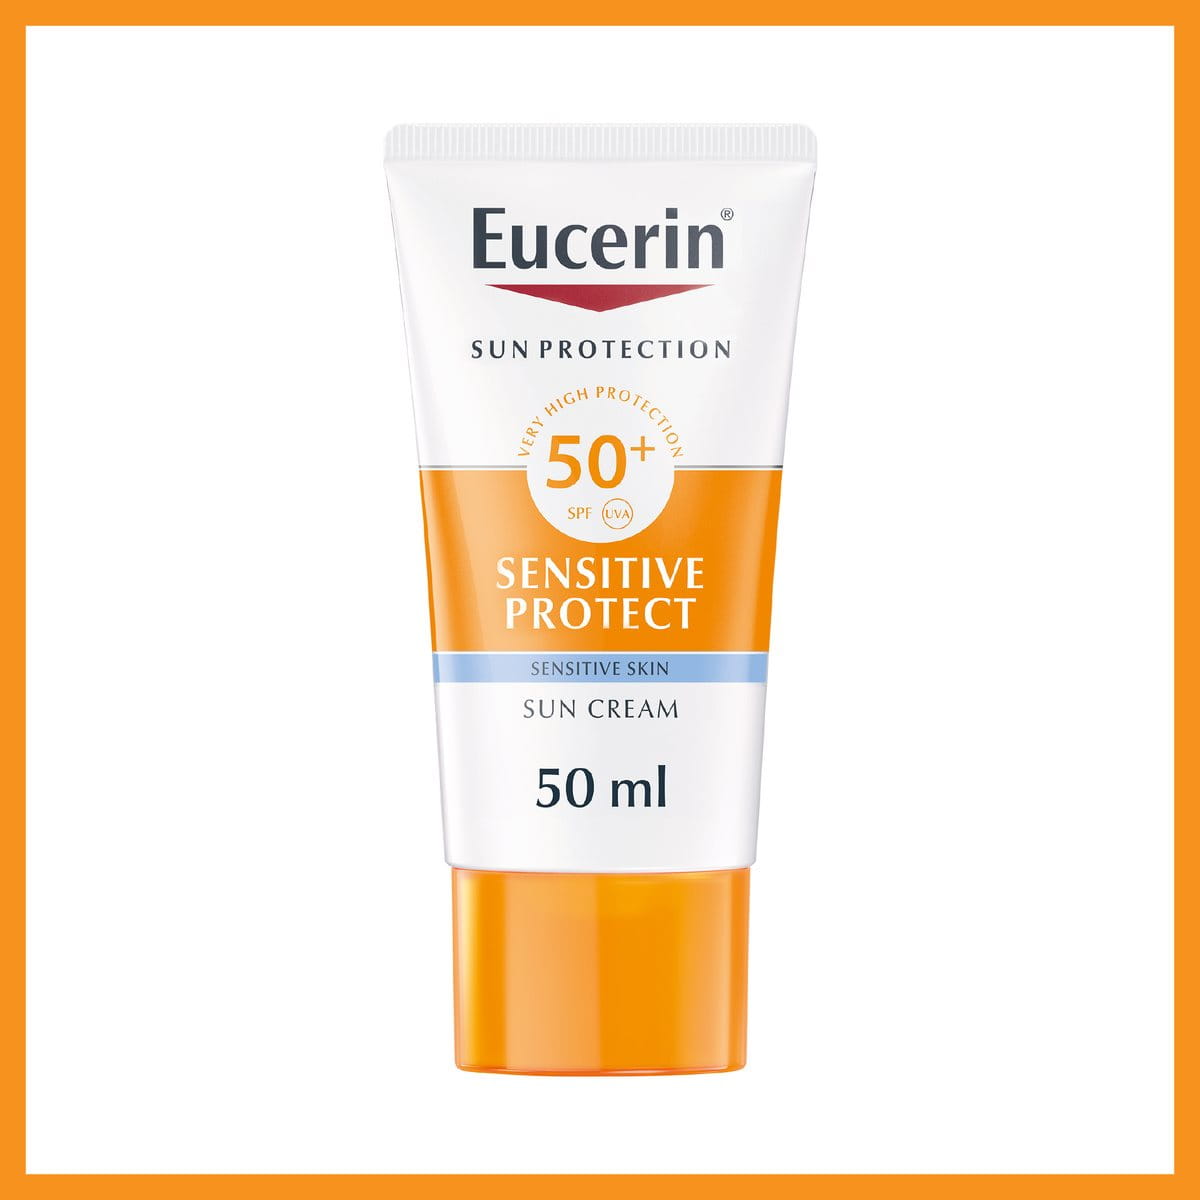 Sun Creme Protect SPF 50+ | sunscreen for sensitive, dry skin | Eucerin